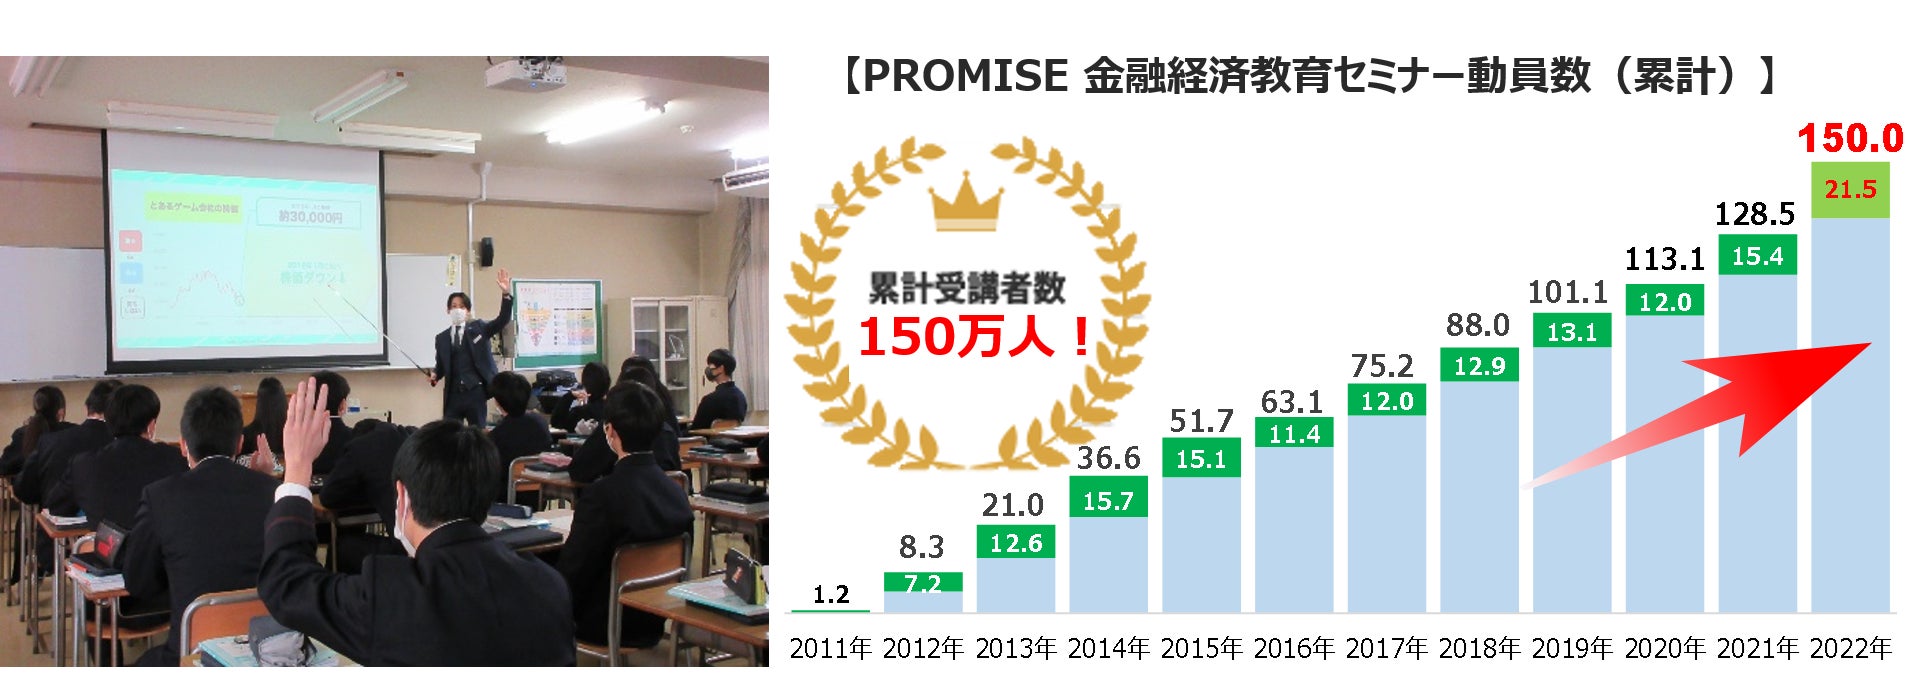 「PROMISE 金融経済教育セミナー」の累計受講者数が150万人突破のサブ画像1